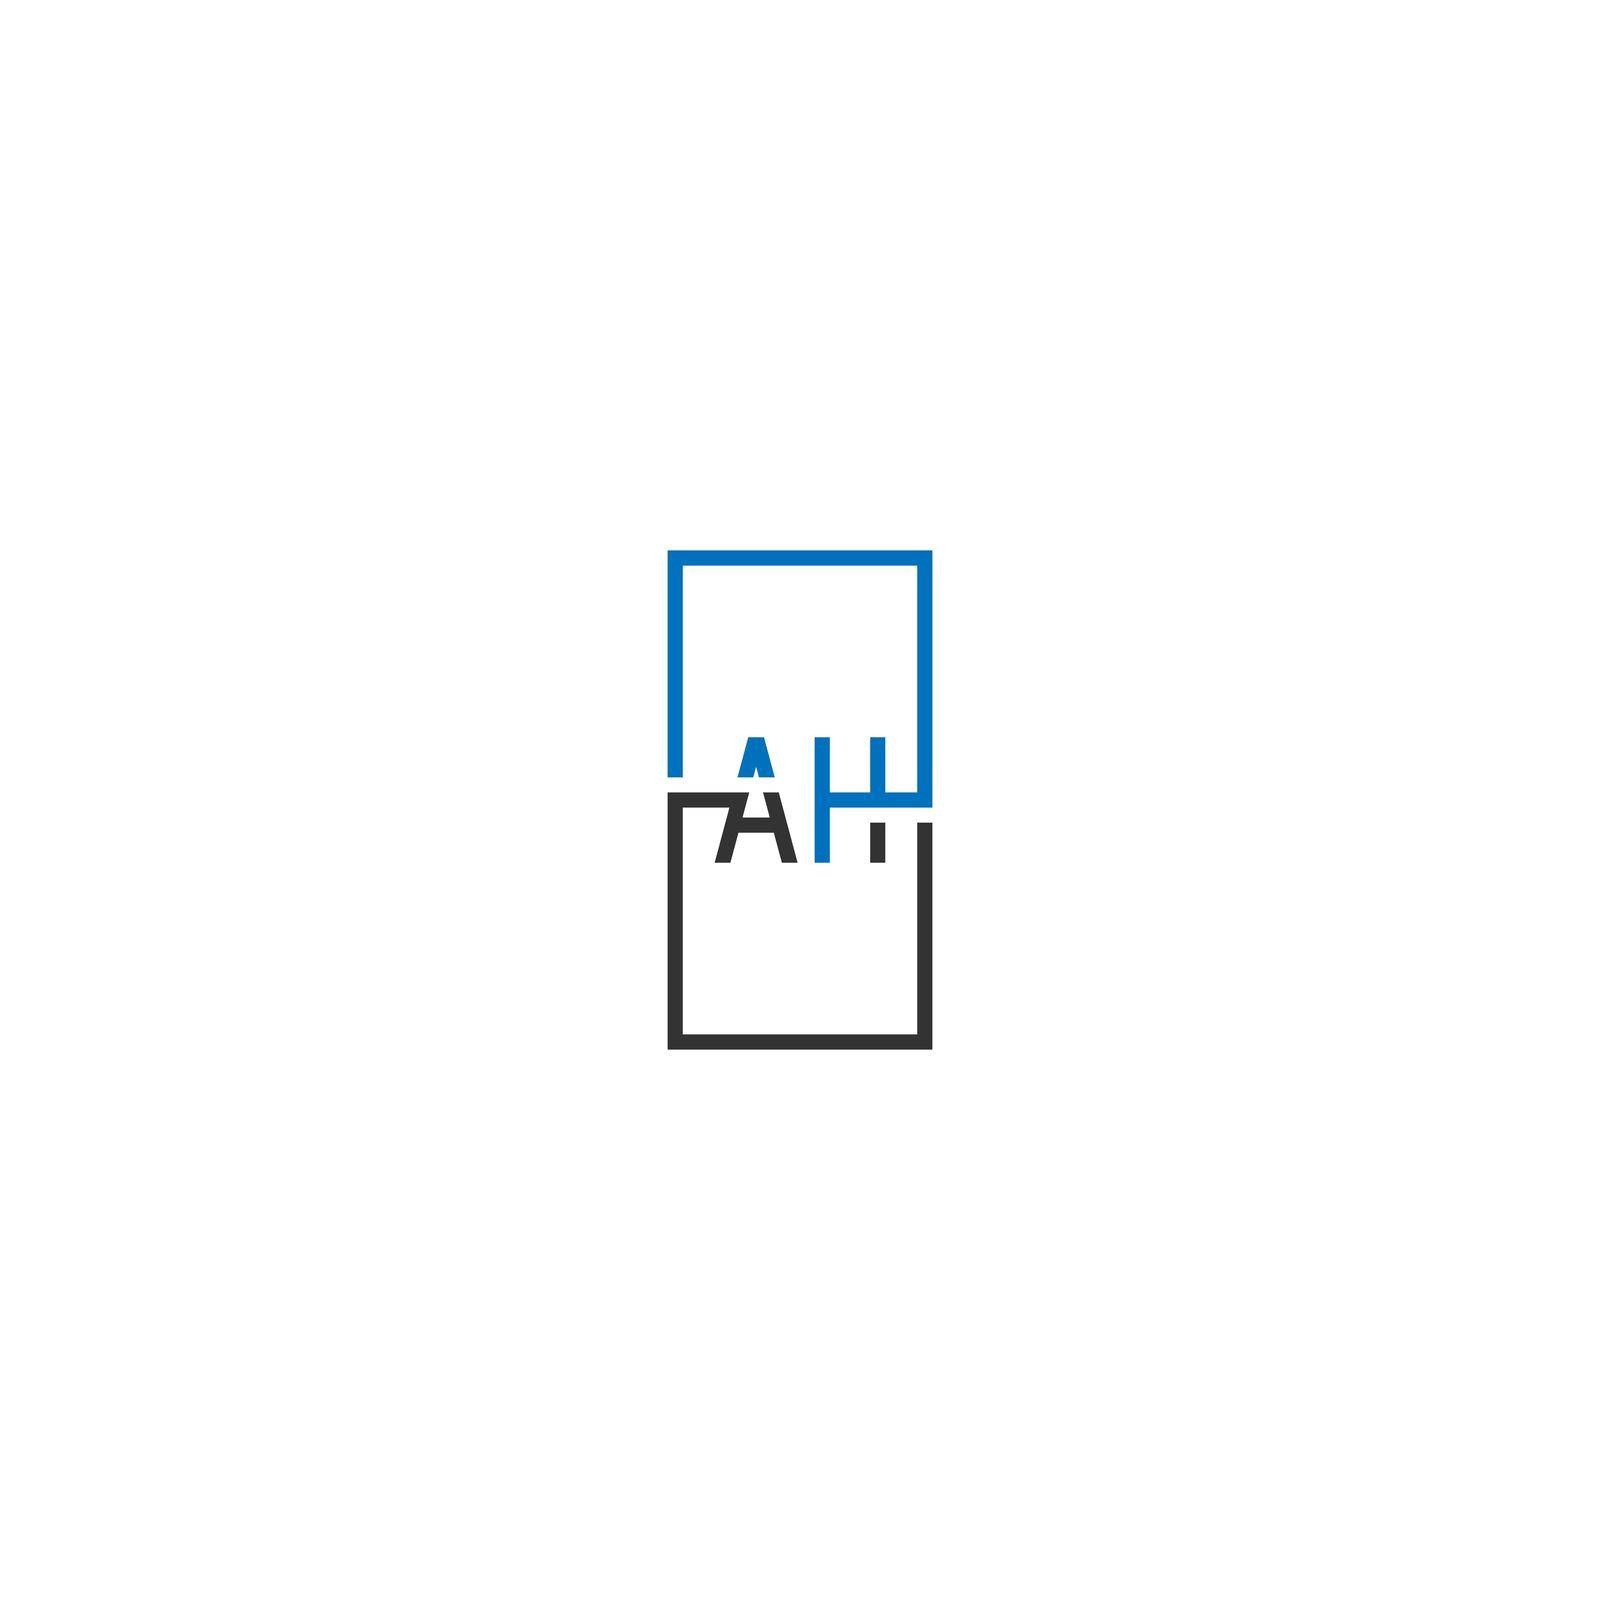 AH logo letter design concept by bellaxbudhong3